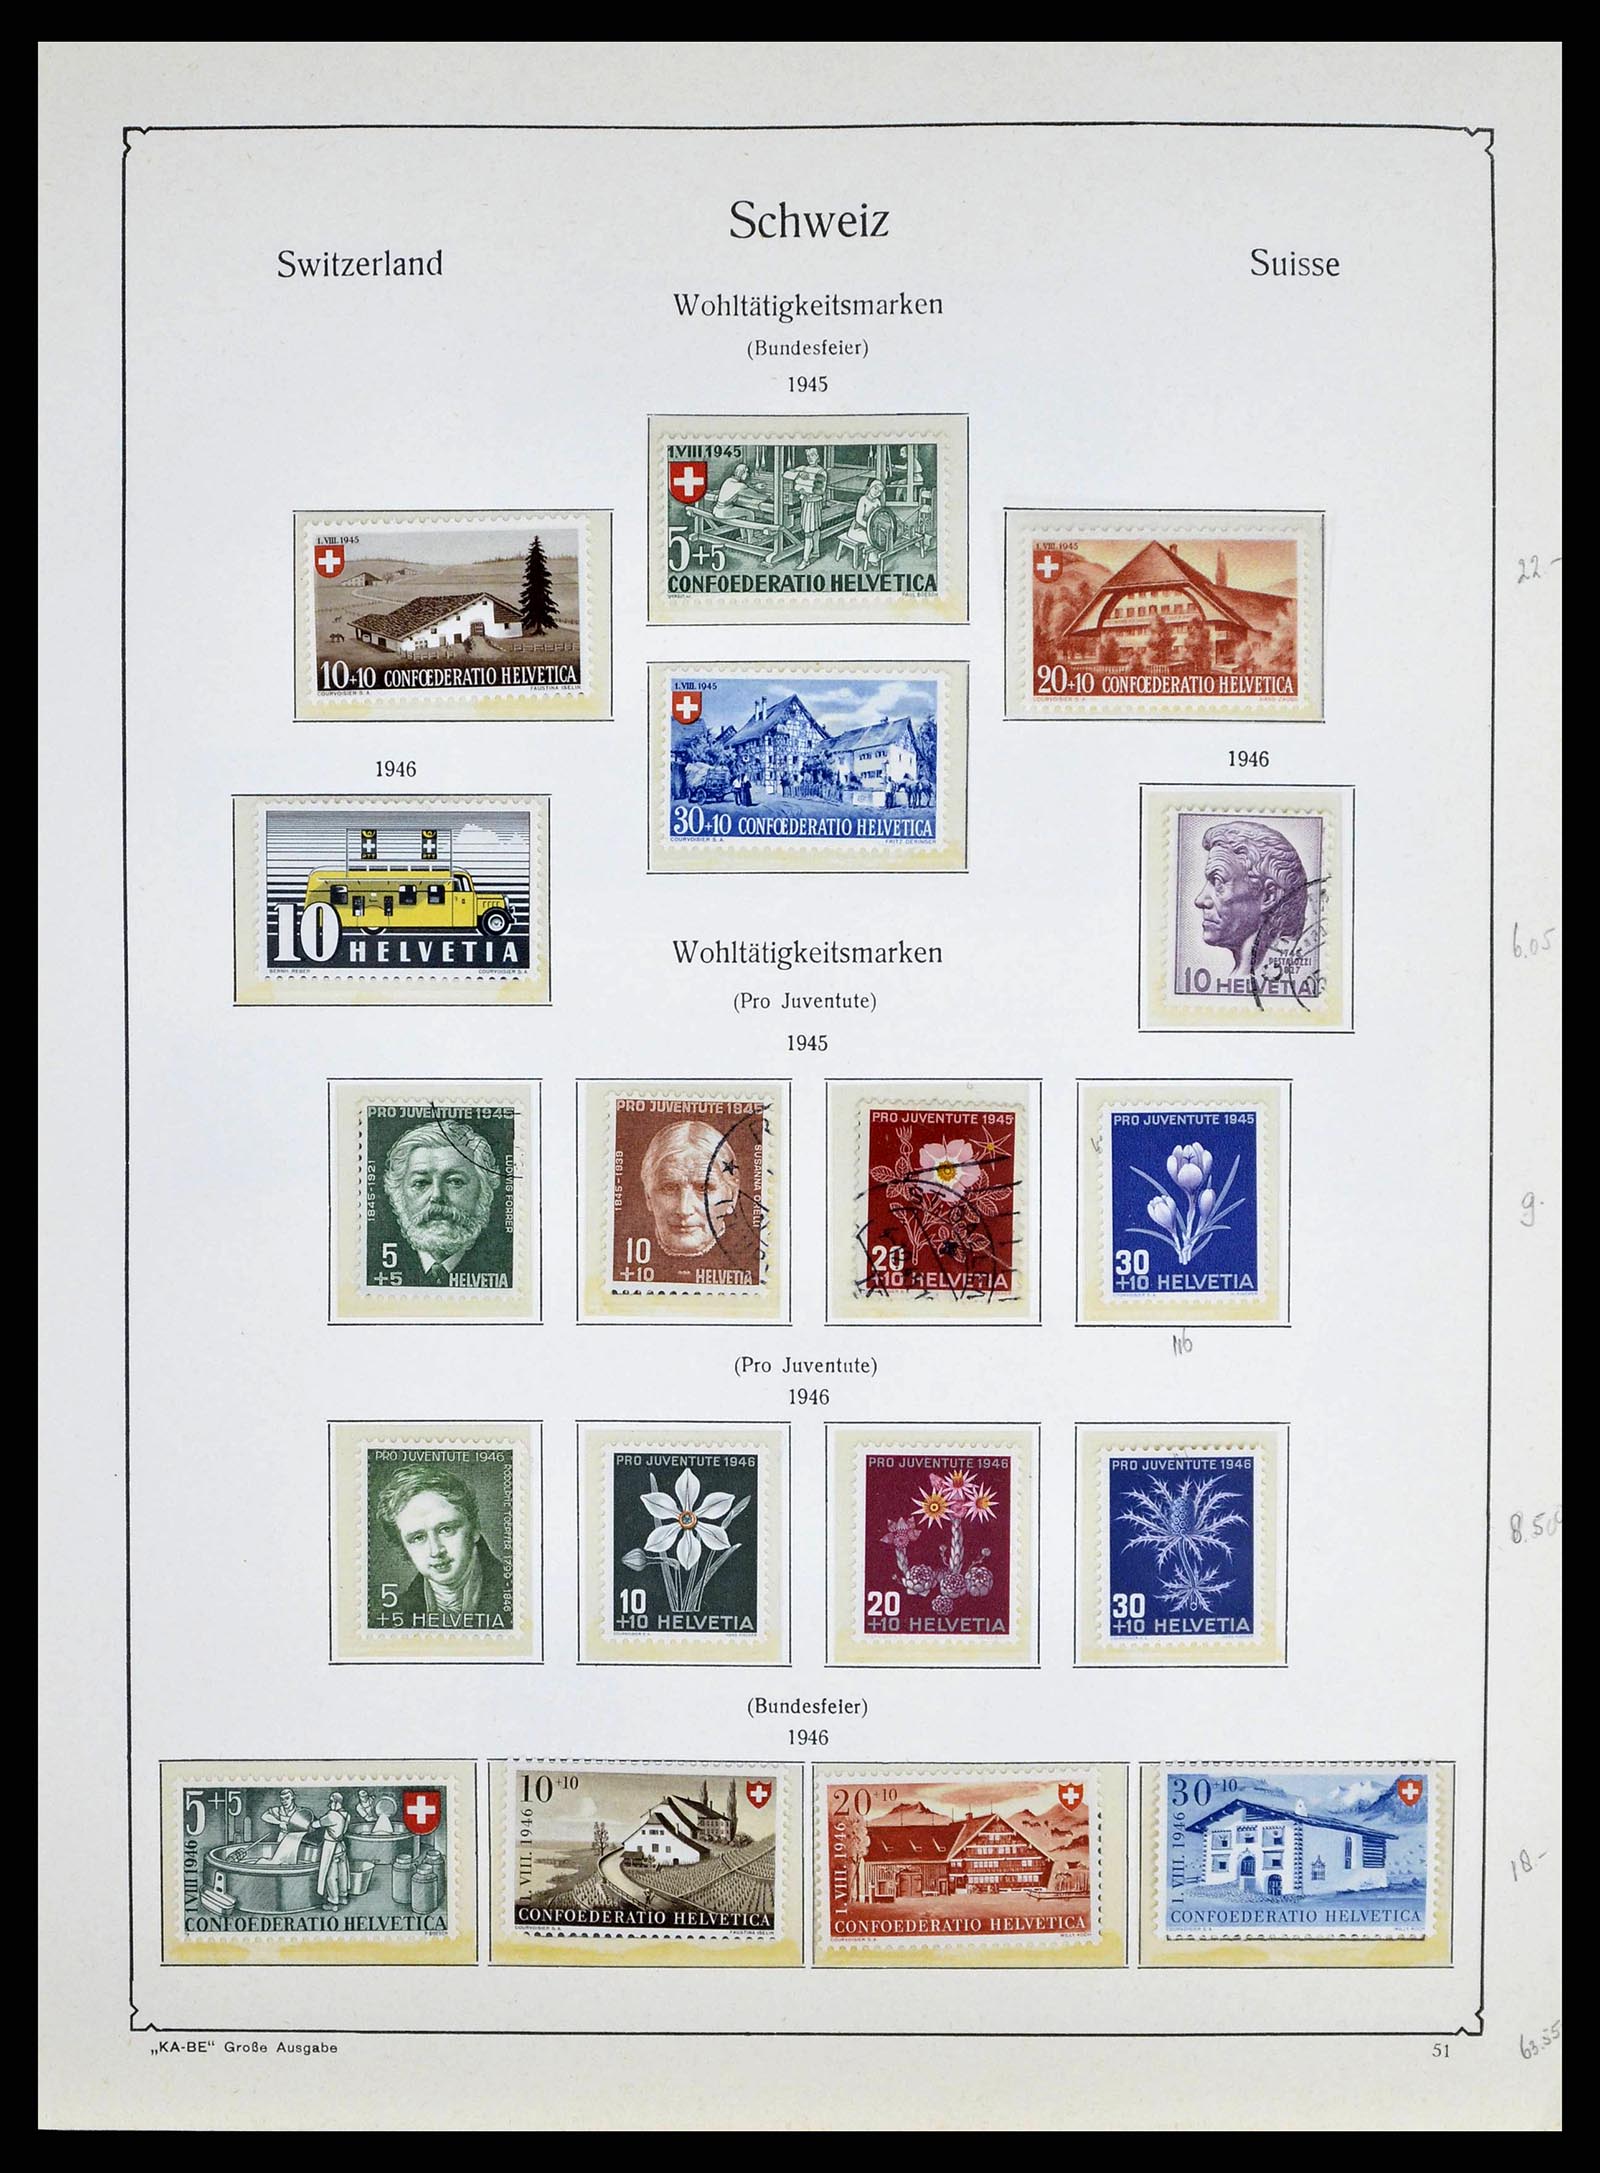 38706 0046 - Stamp collection 38706 Switzerland 1854-1985.